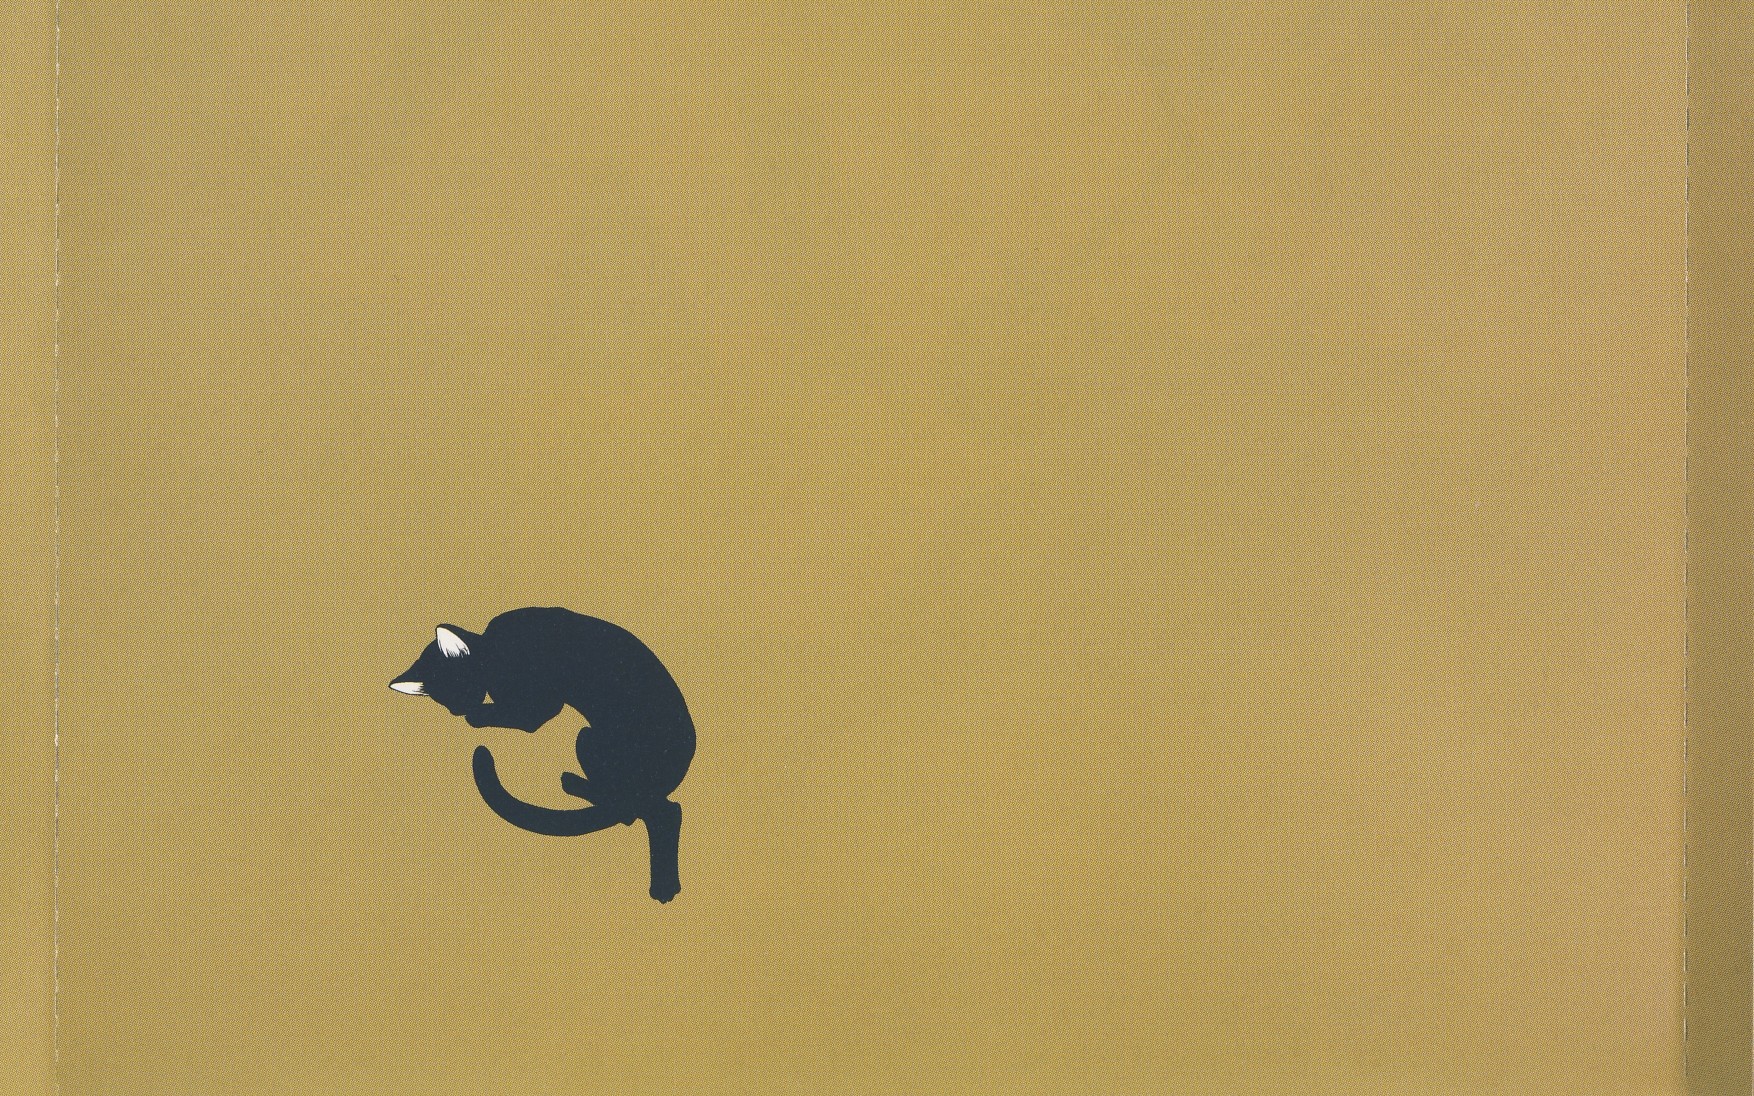 【资讯】包括10COUNT黑猫男友在内的6部日耽动画正式发布_哔哩哔哩 (゜-゜)つロ 干杯~-bilibili